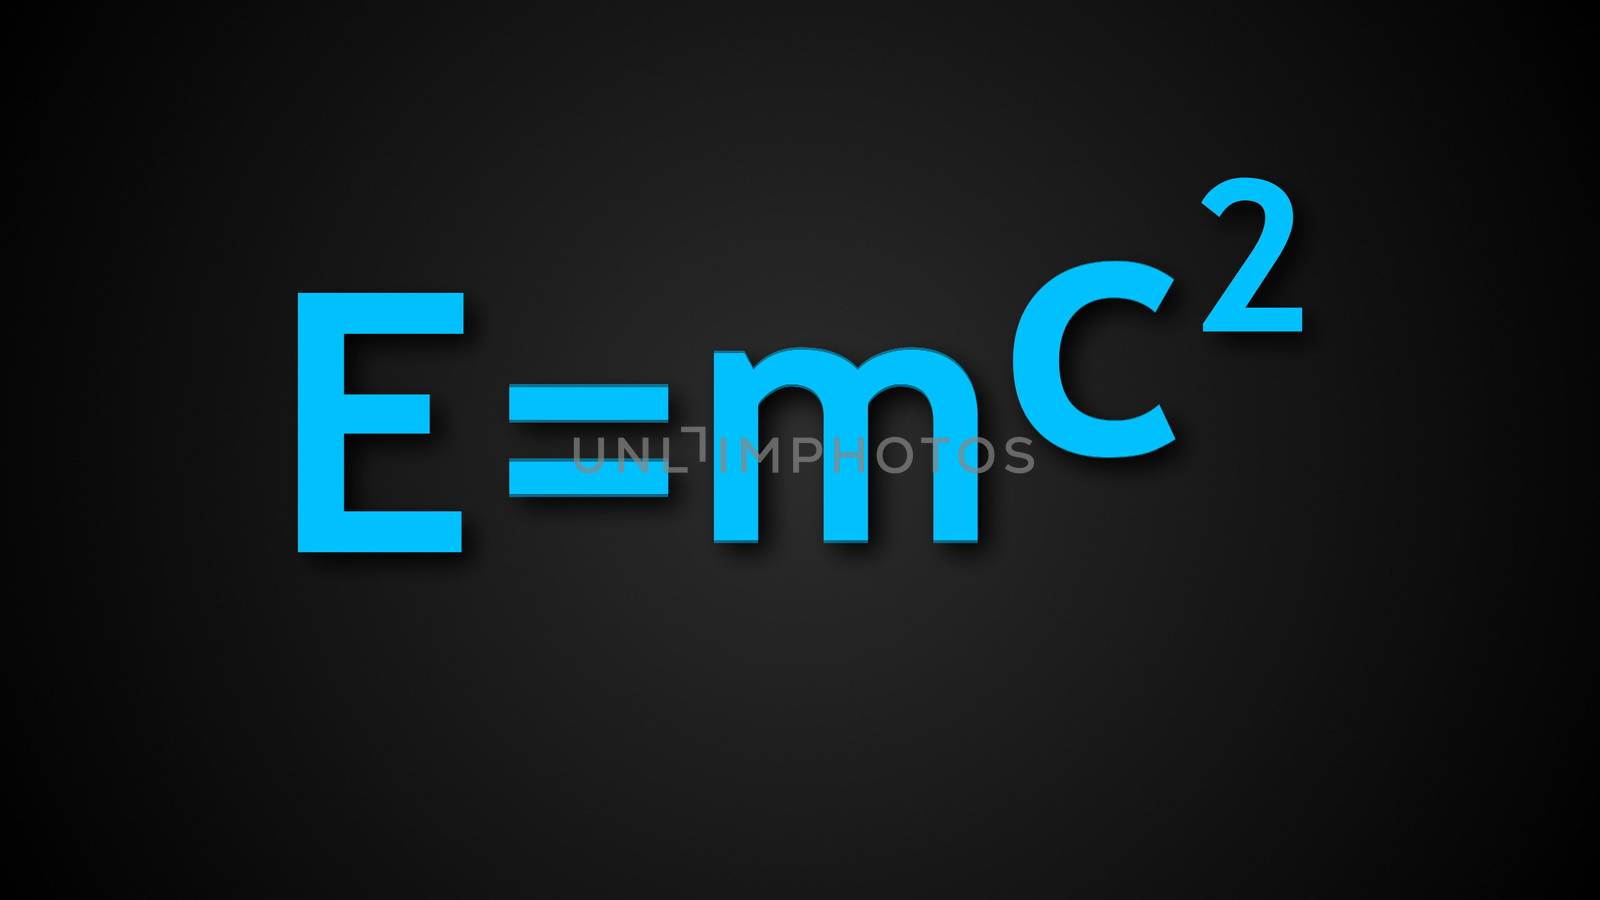 E mc2 Albert Einsteins physical formula are on black background, mass-energy equivalence 3d backdrop